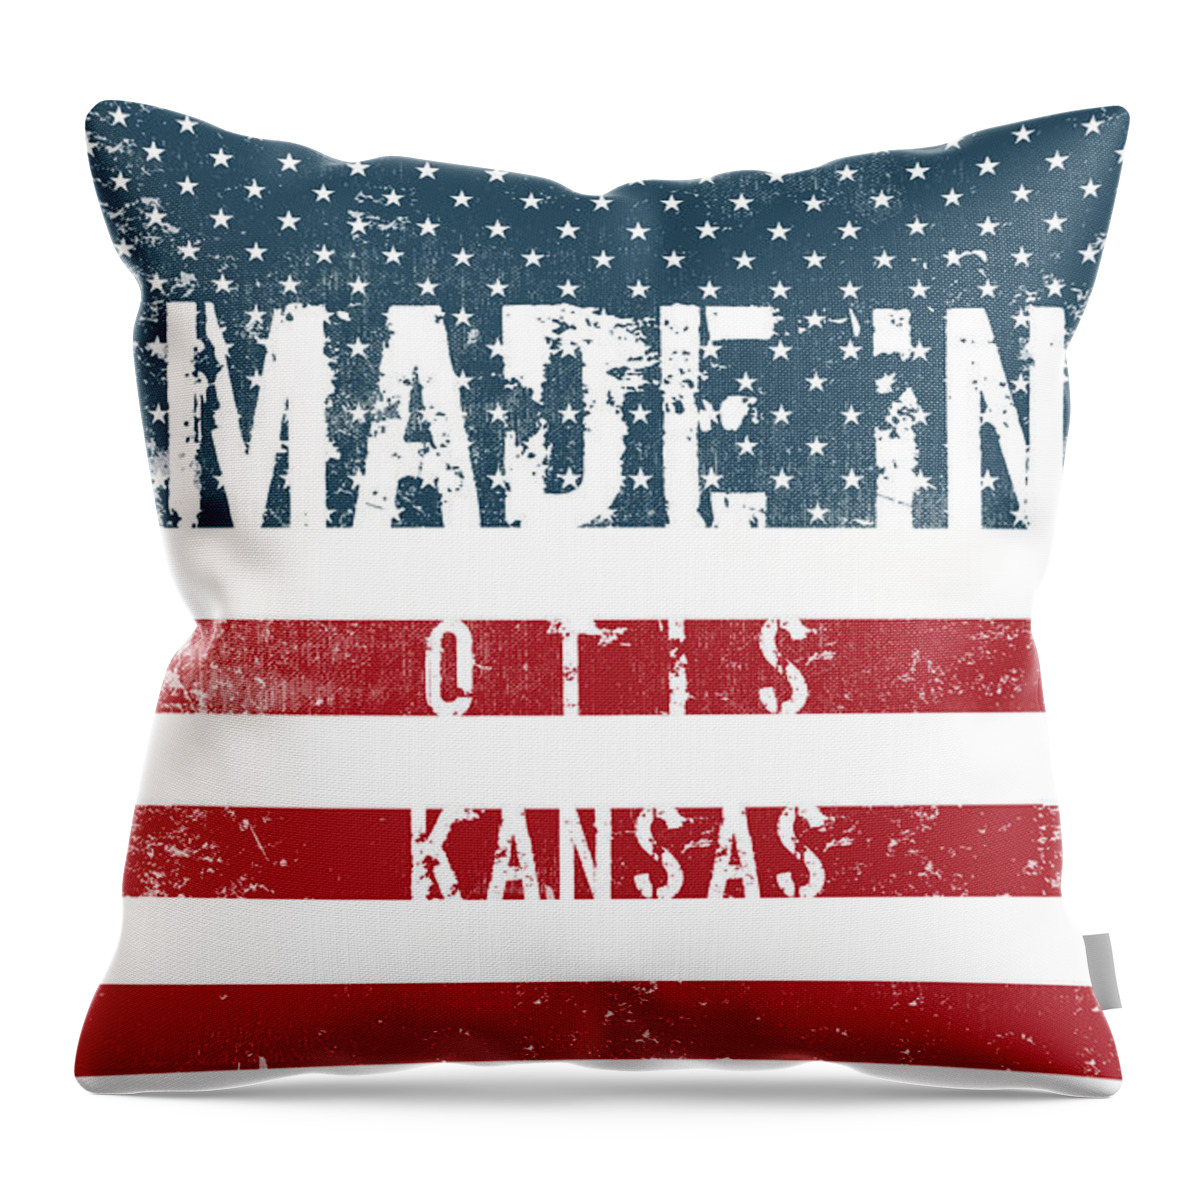 Otis Throw Pillow featuring the digital art Made in Otis, Kansas #Otis #Kansas by TintoDesigns